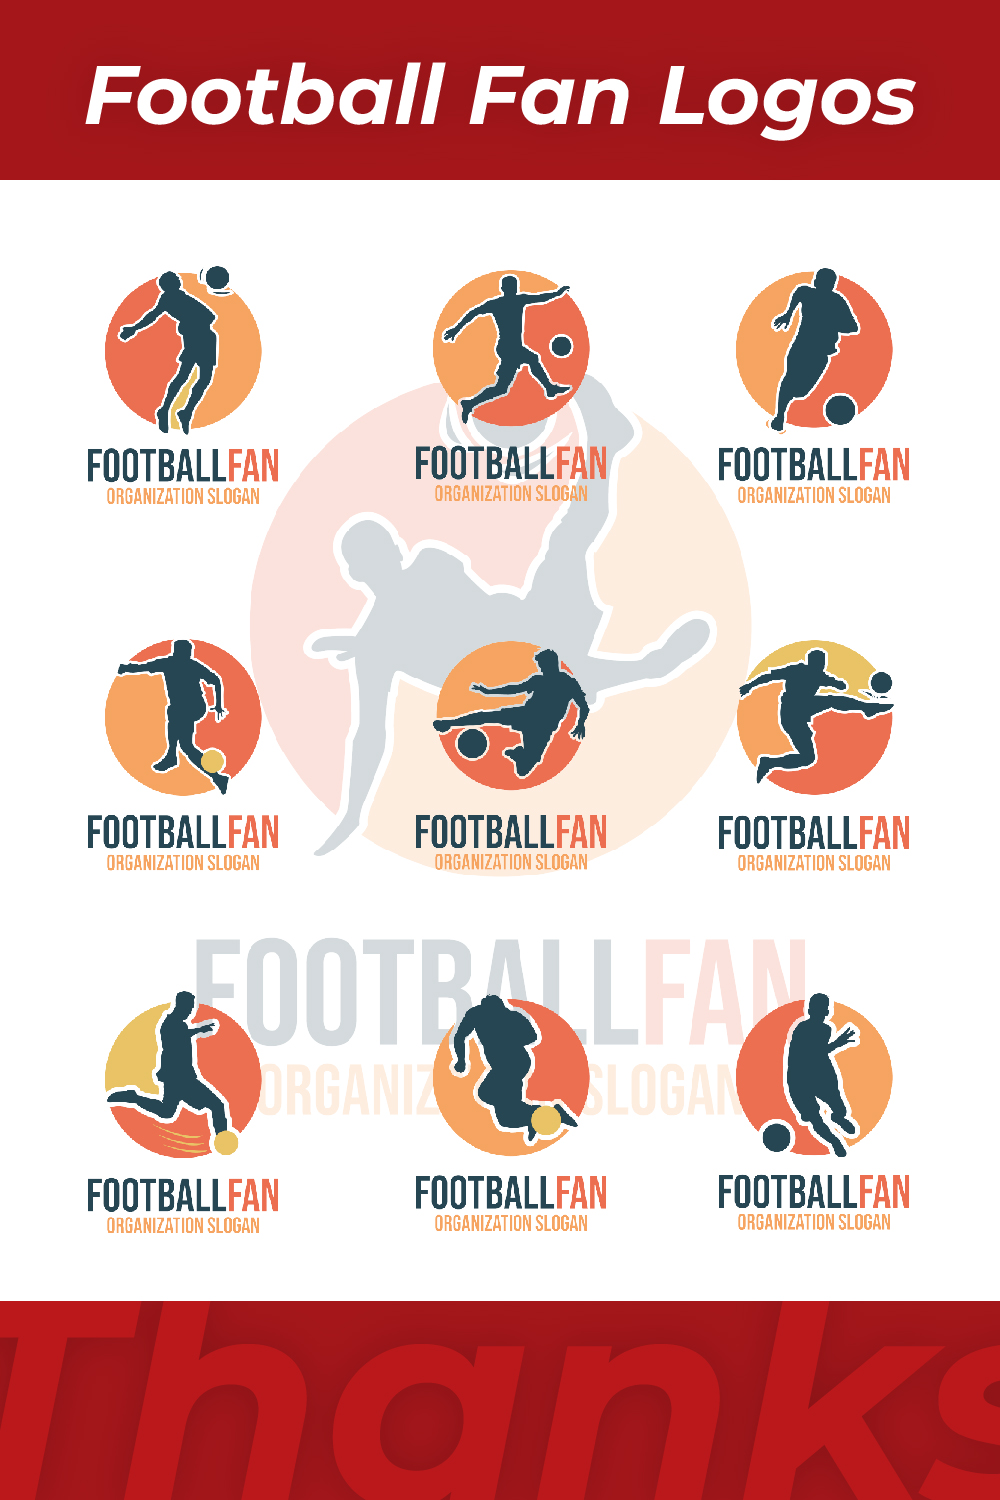 10 Football Fan Logos Pinterest Image.